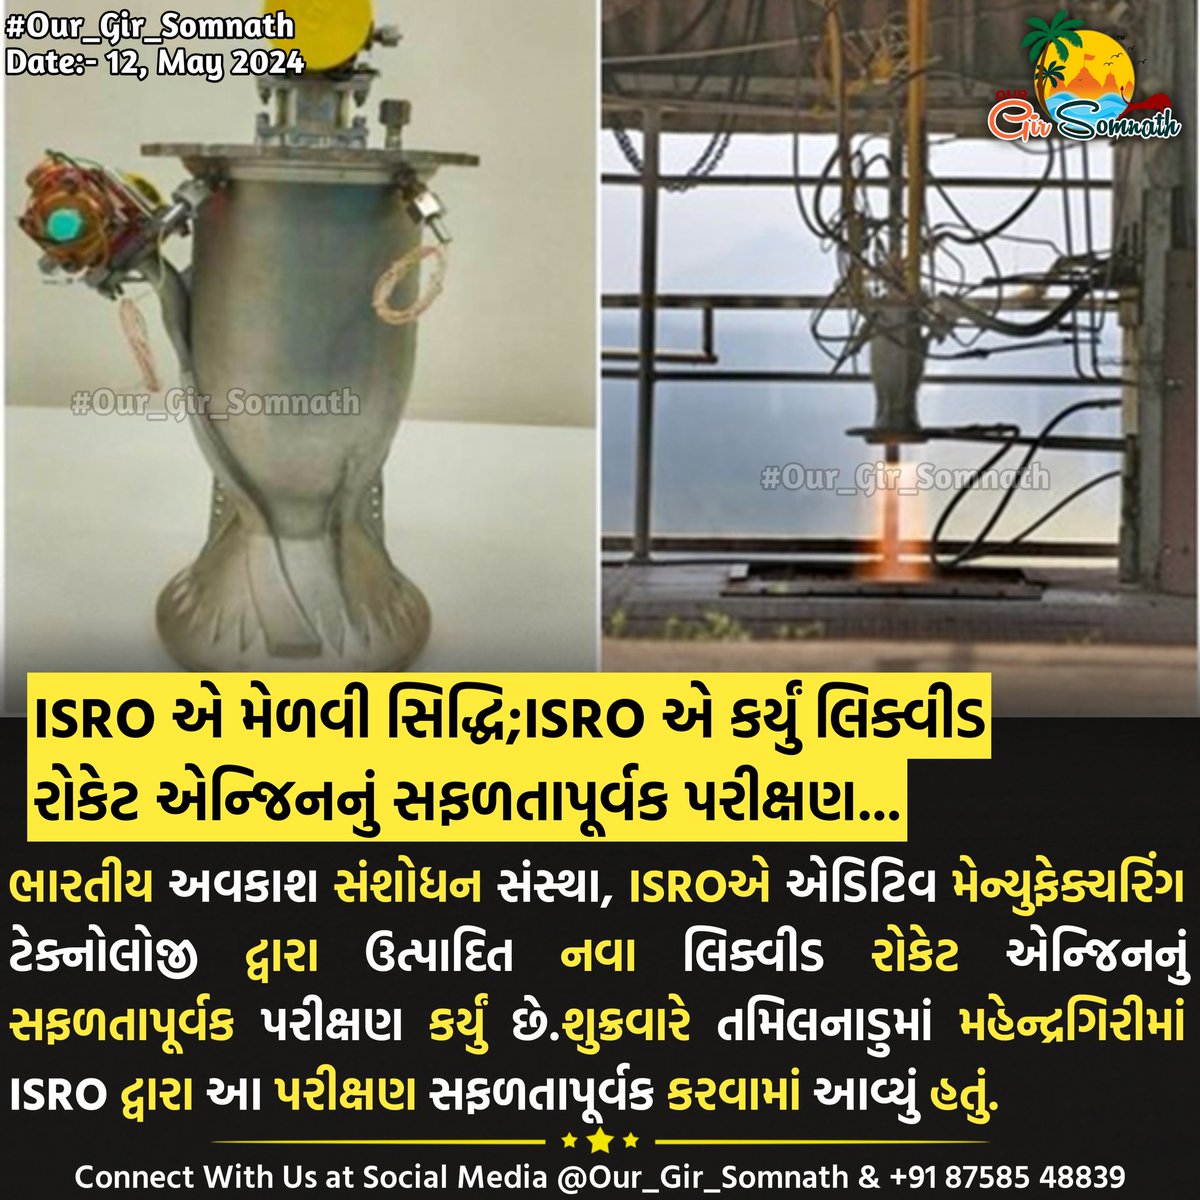 ISRO એ મેળવી સિદ્ધિ;ISRO એ કર્યું લિક્વીડ રોકેટ એન્જિનનું સફળતાપૂર્વક પરીક્ષણ... #our_gir_somnath #isro #liquidrocket #scienceexperiments